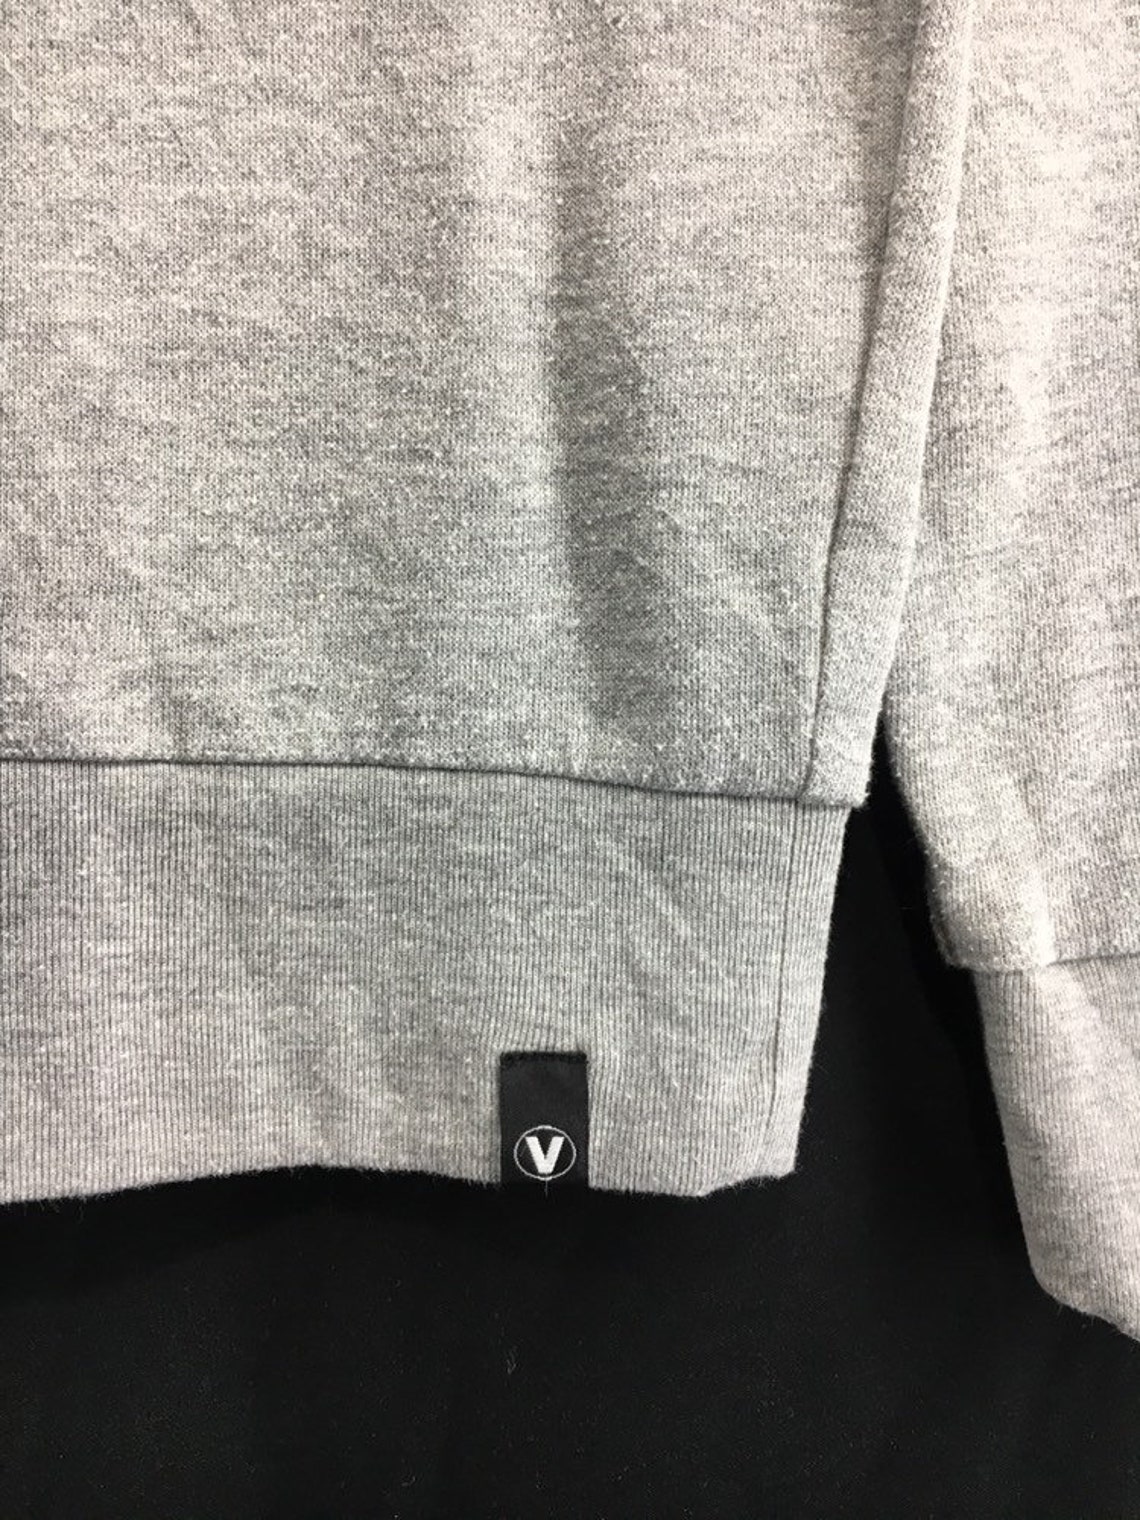 Vintage Vision Street Wear Sweatshirt - Etsy